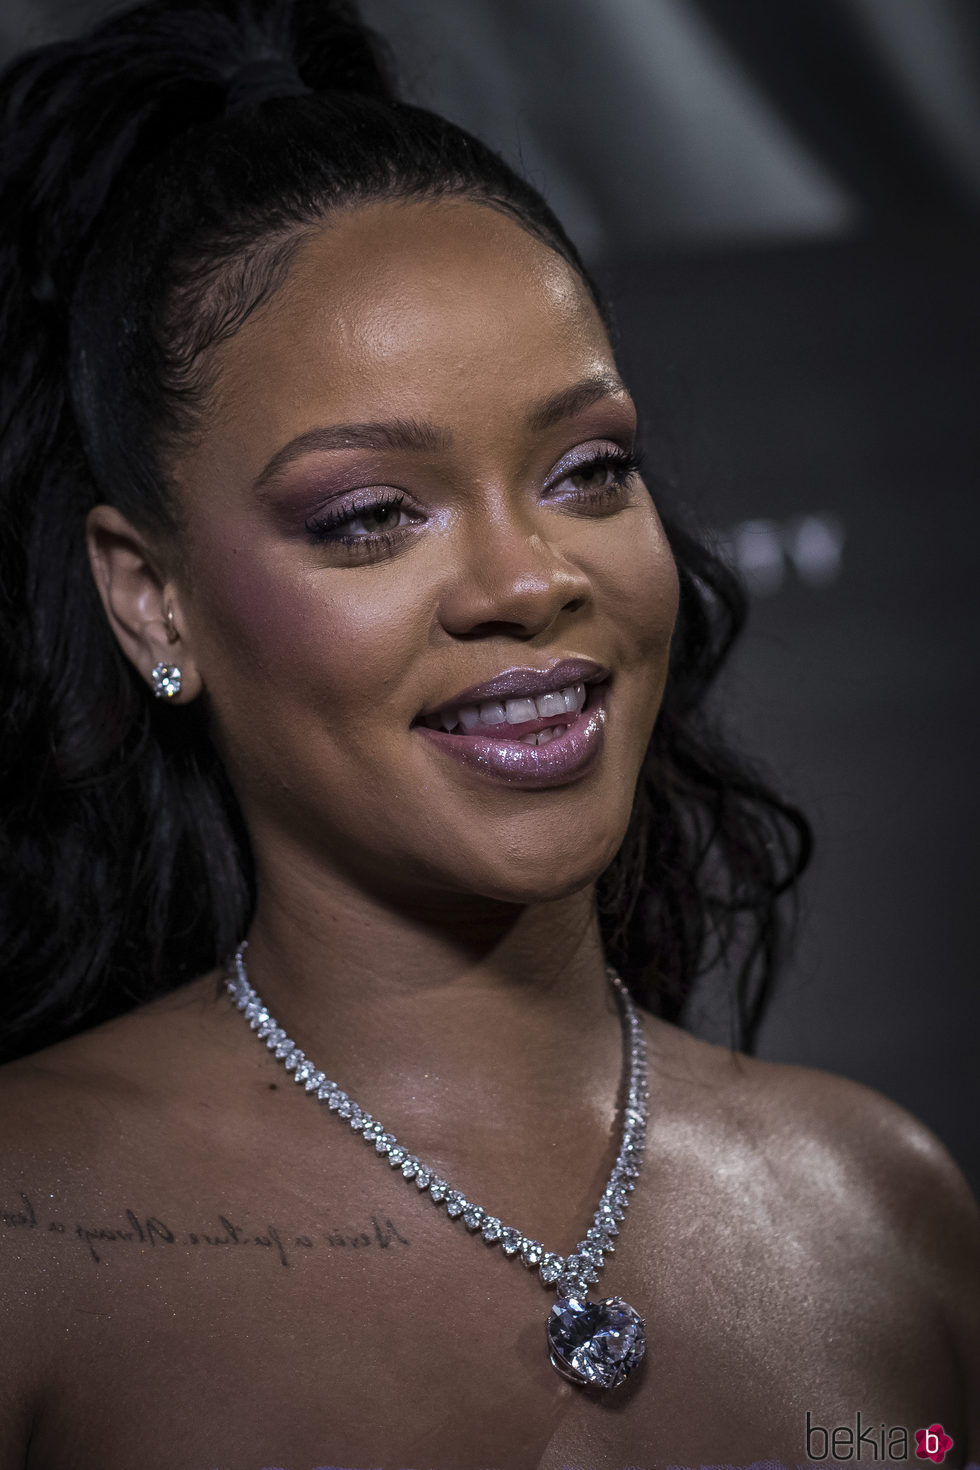 Rihanna presume de maquillaje morado